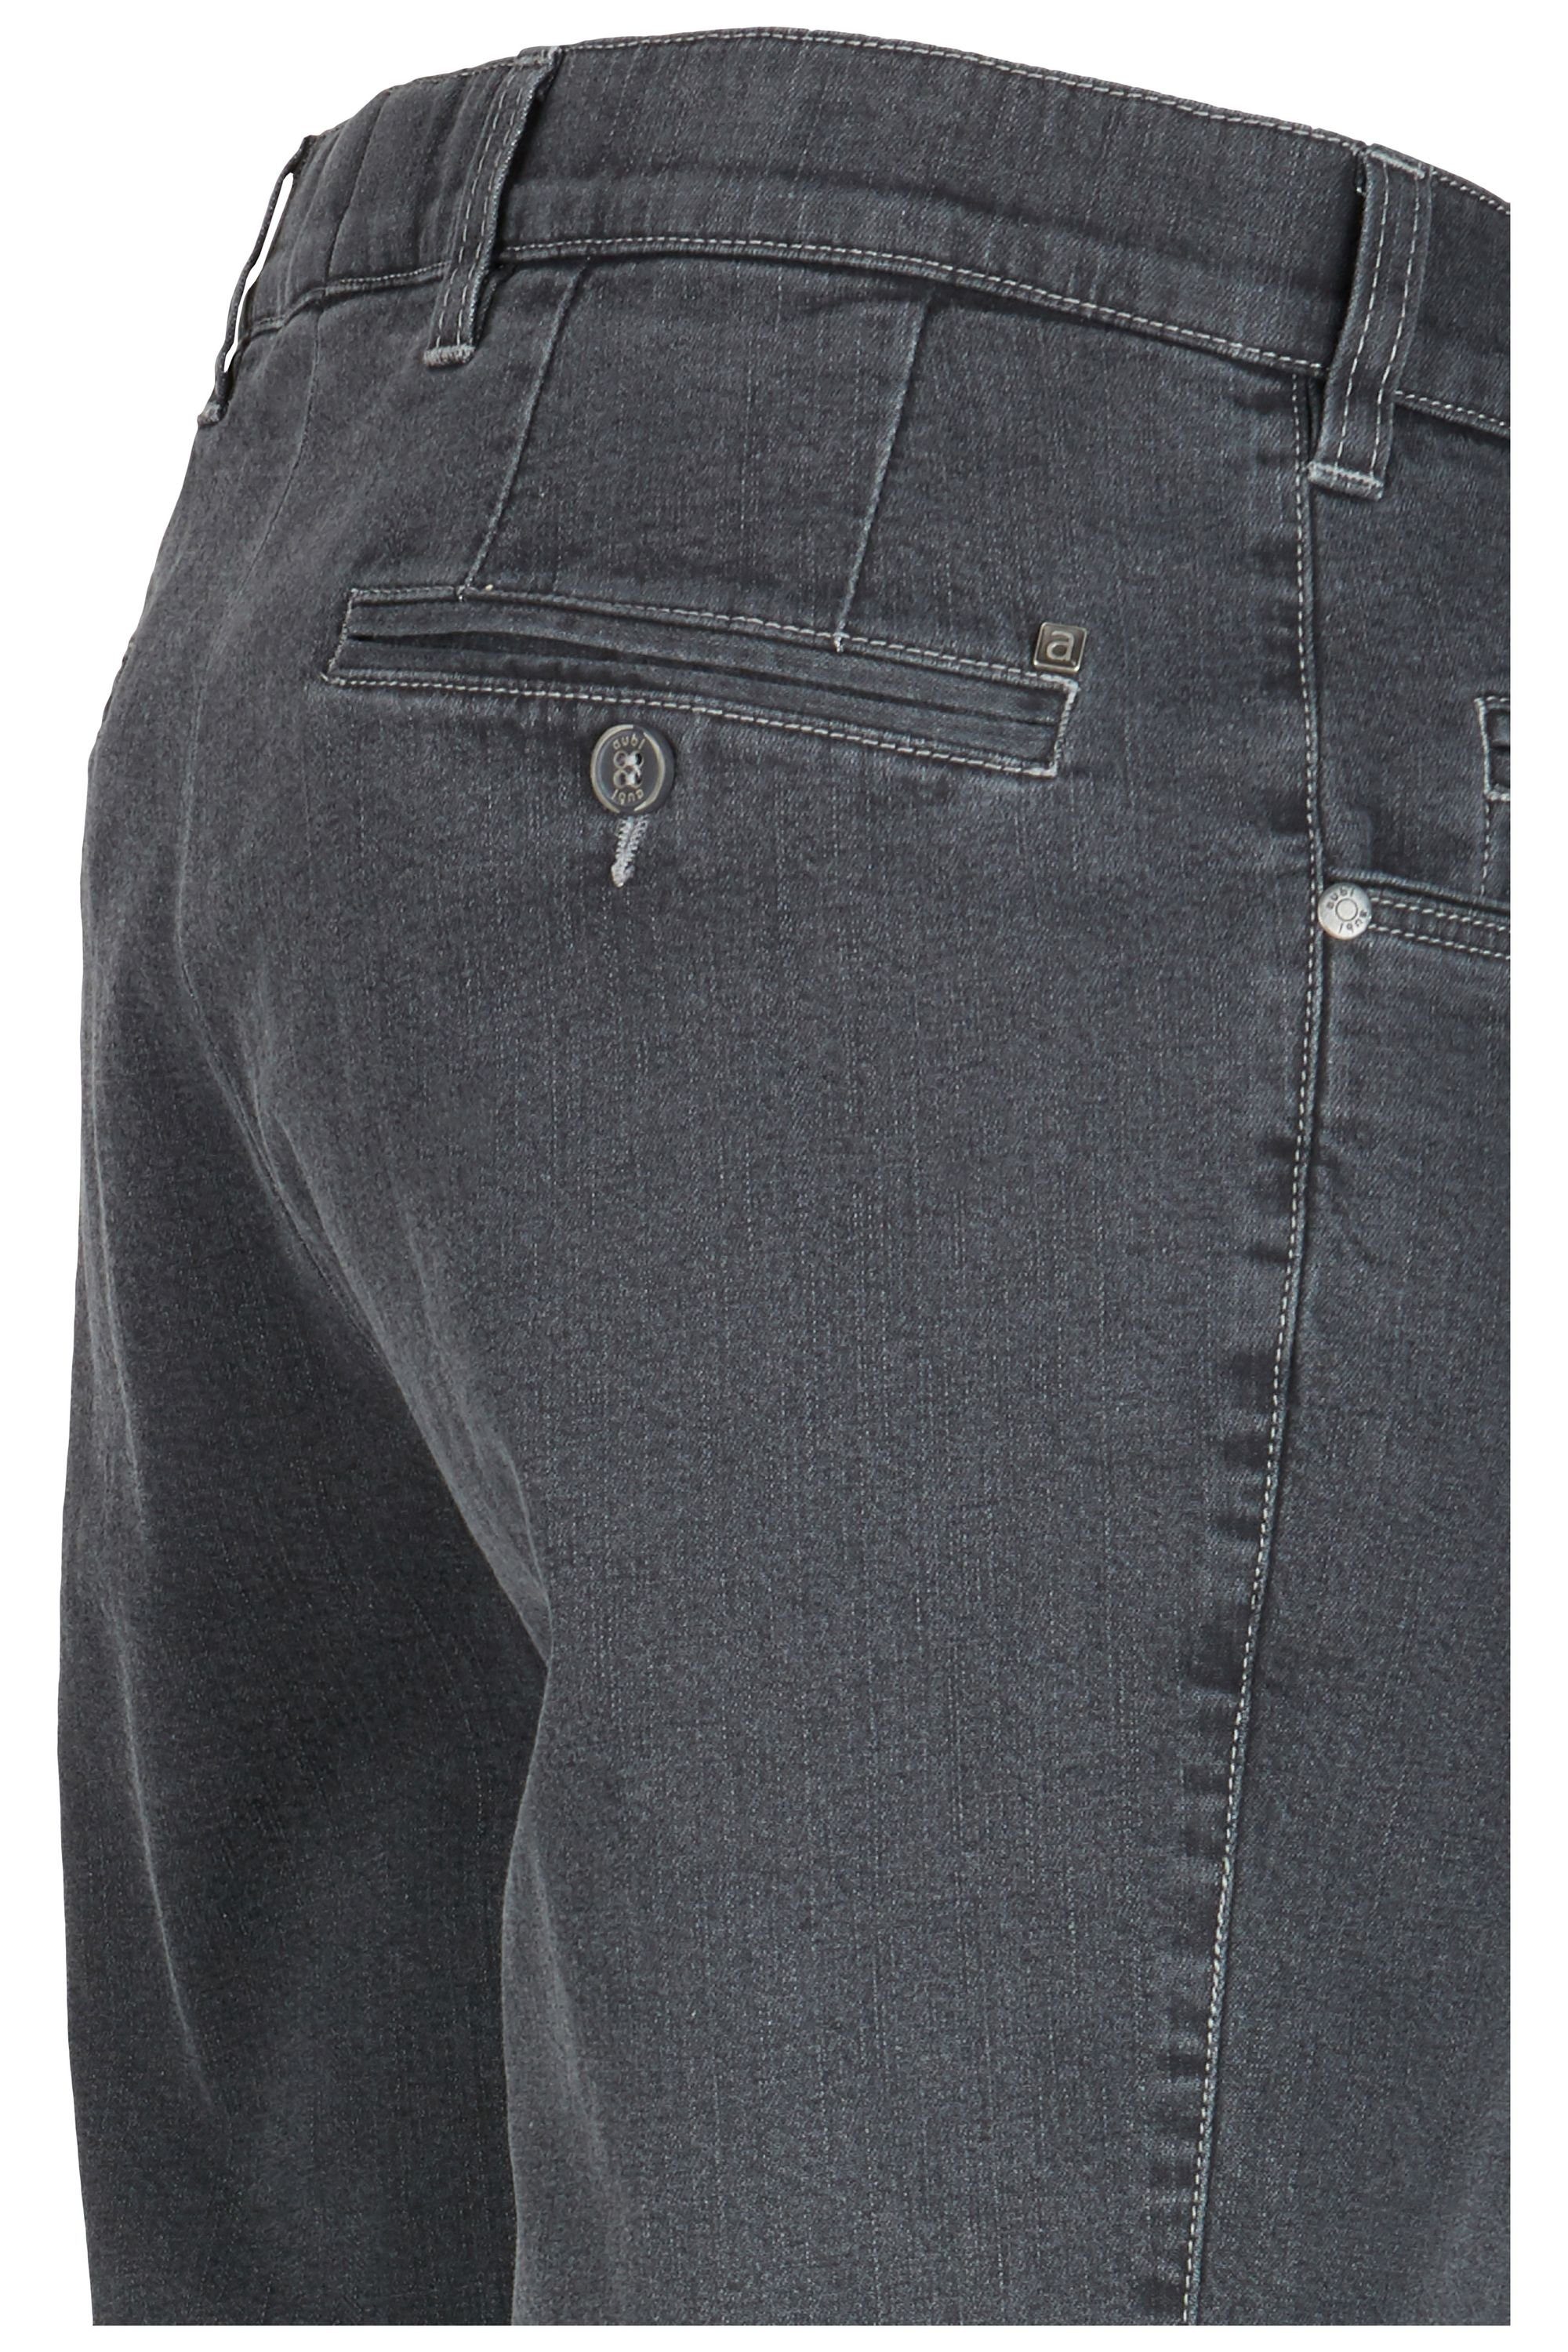 aubi: Bequeme Jeans Herren Hose 577 Fit Stretch Perfect grey aubi Modell (53) Jeans